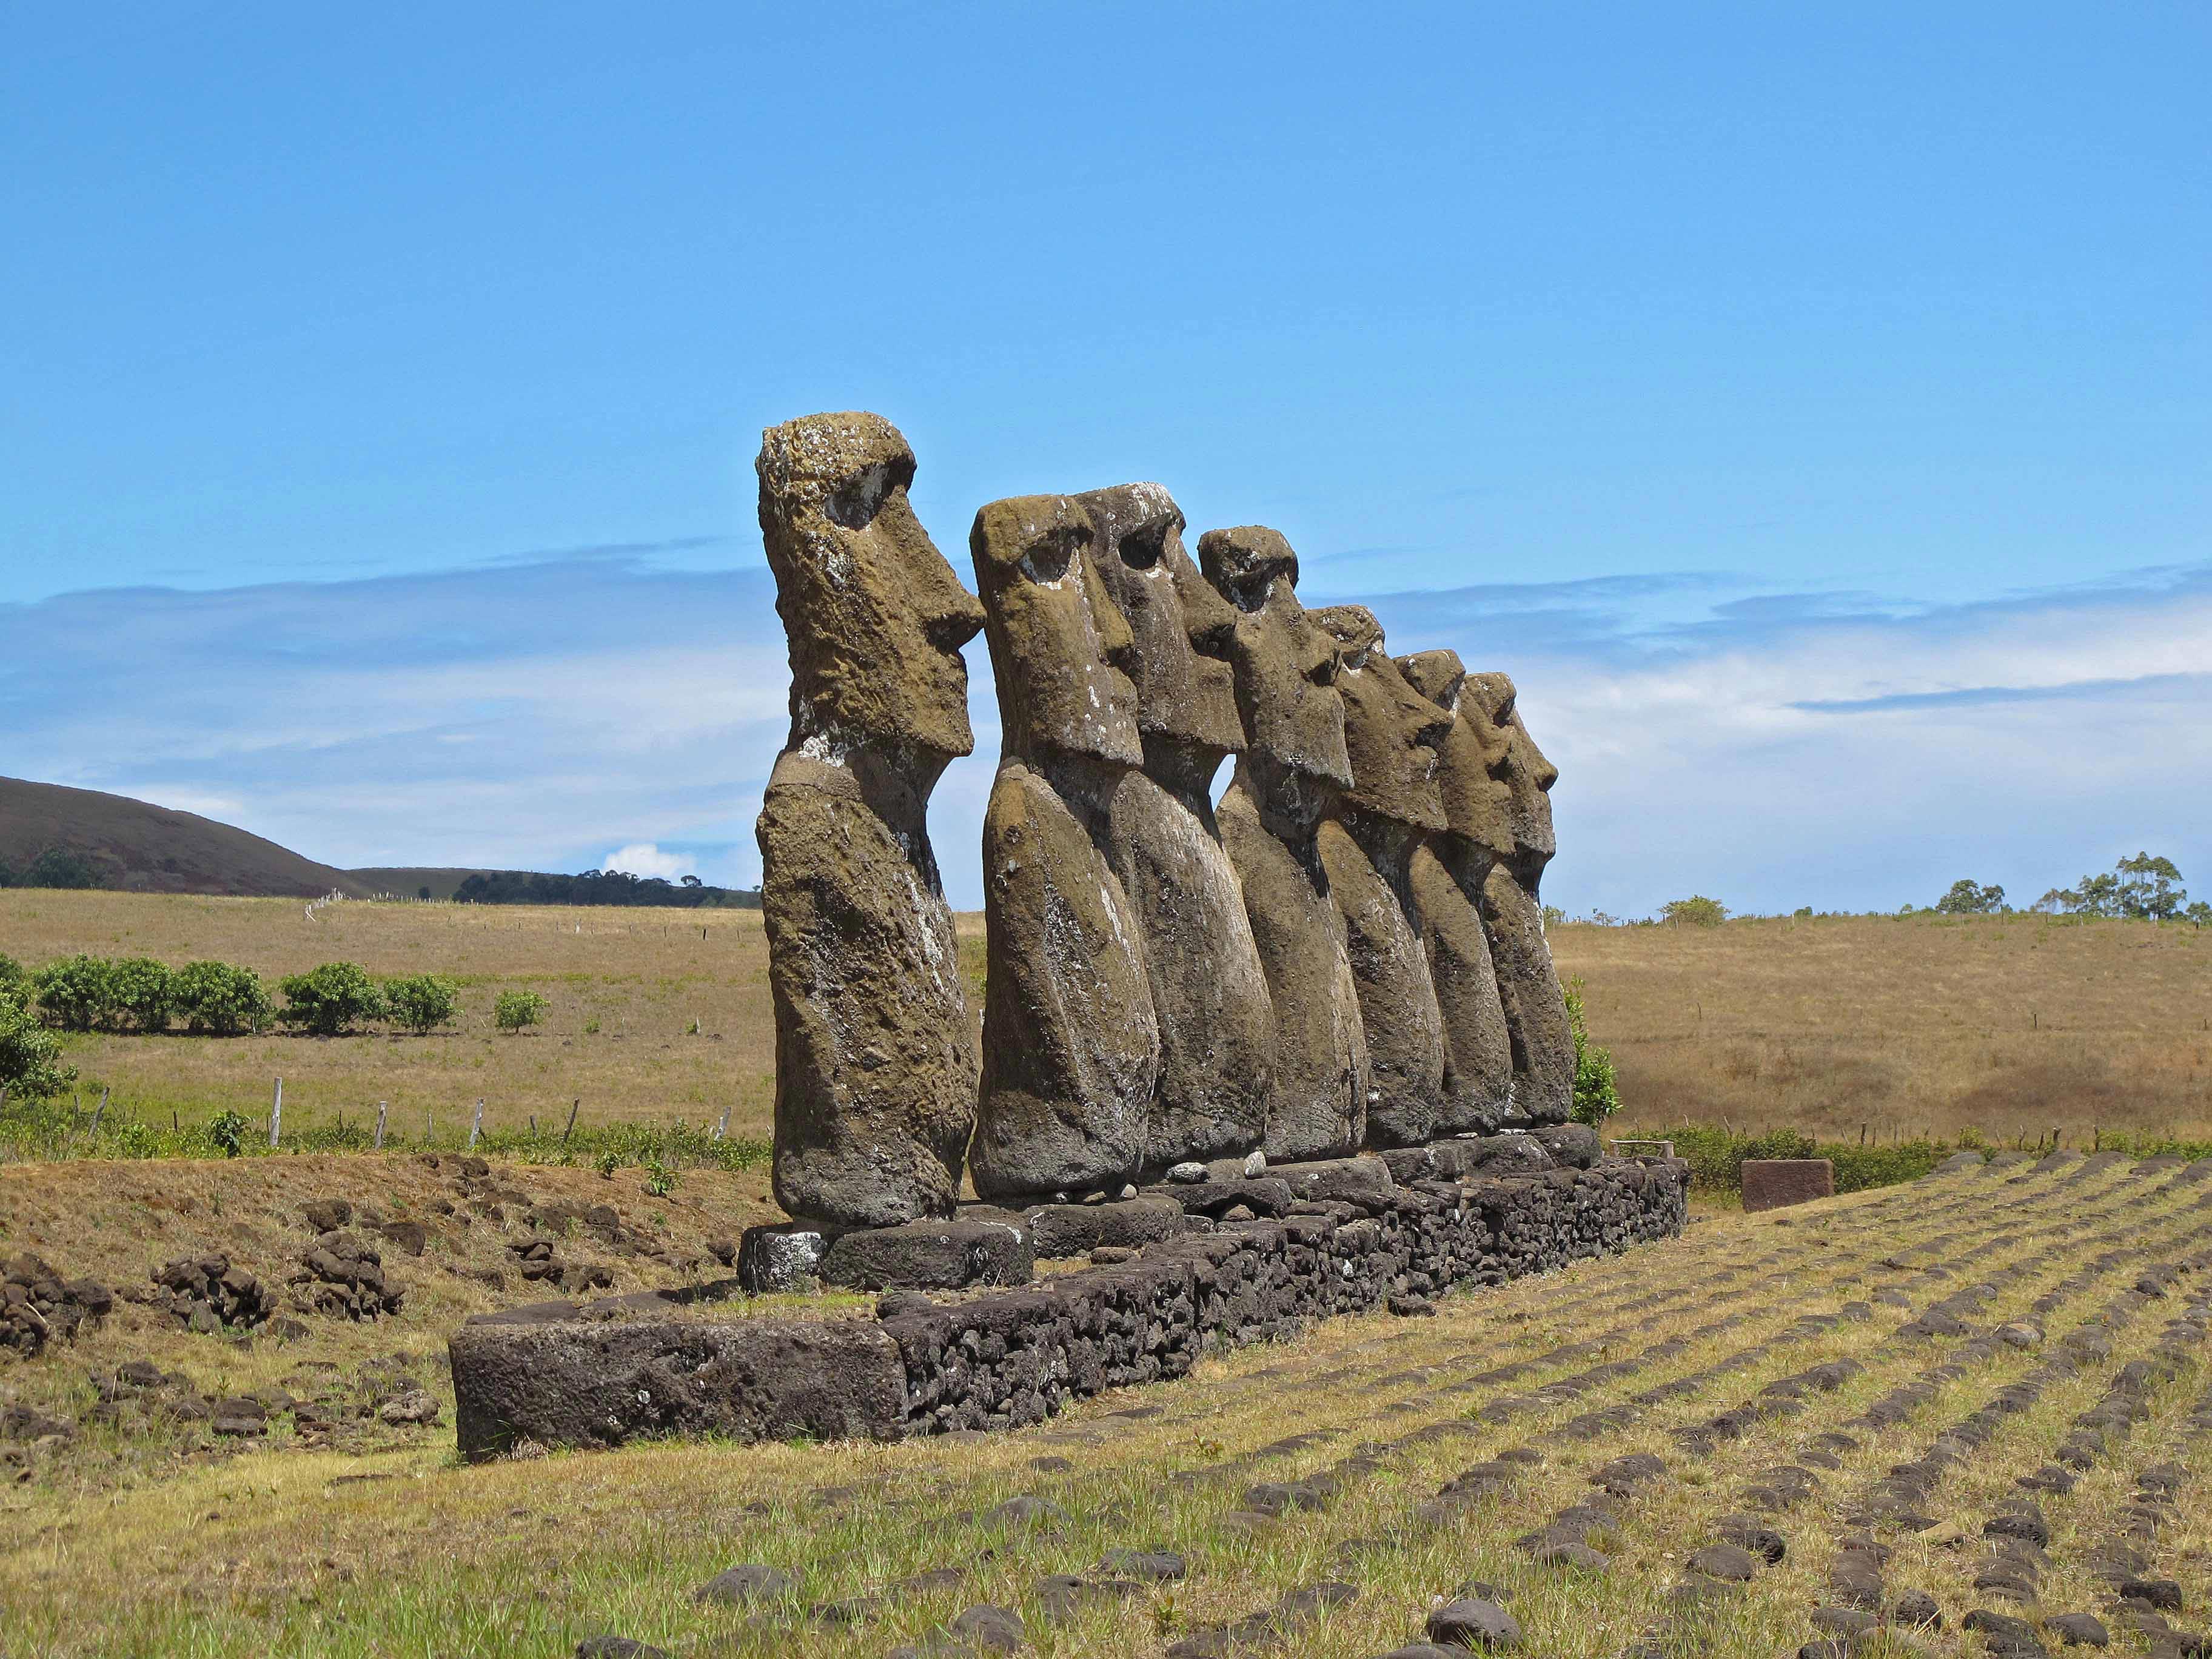 Statues - Iles de paques - Chili